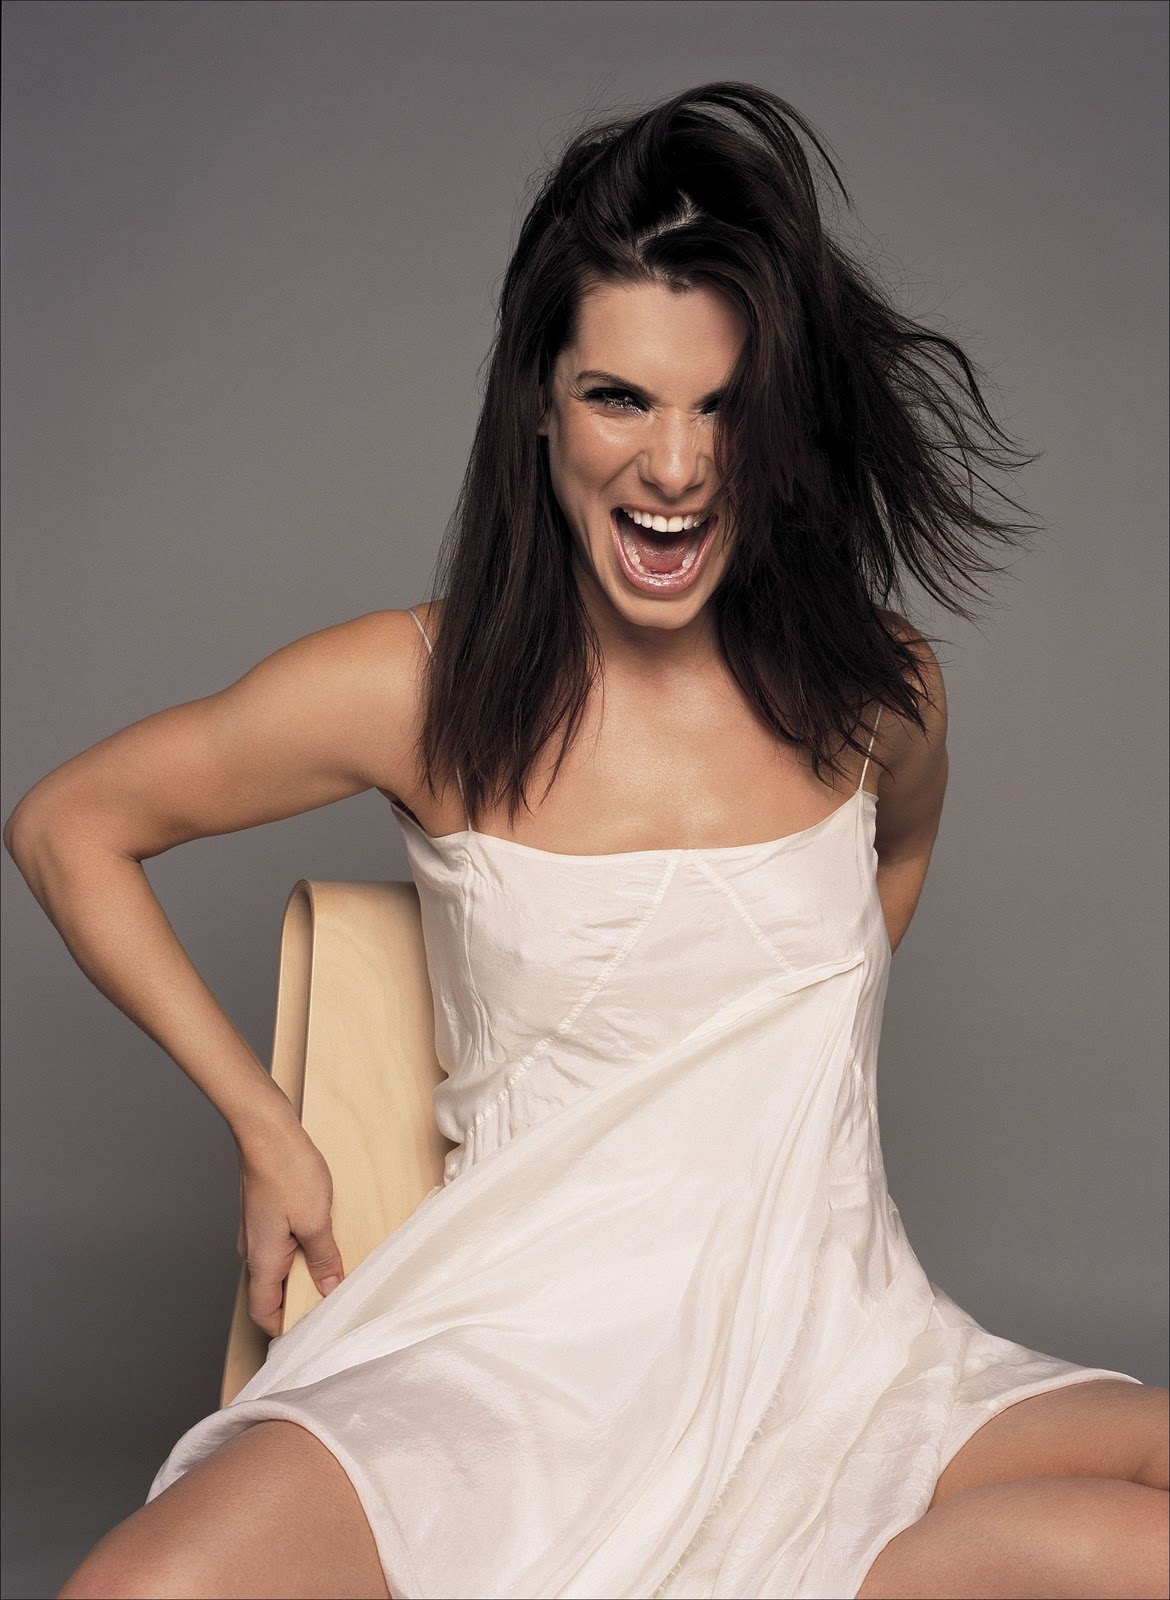 Actress Sandra Bullock Open Mouth Dark Hair Women Nightgown 1170x1600